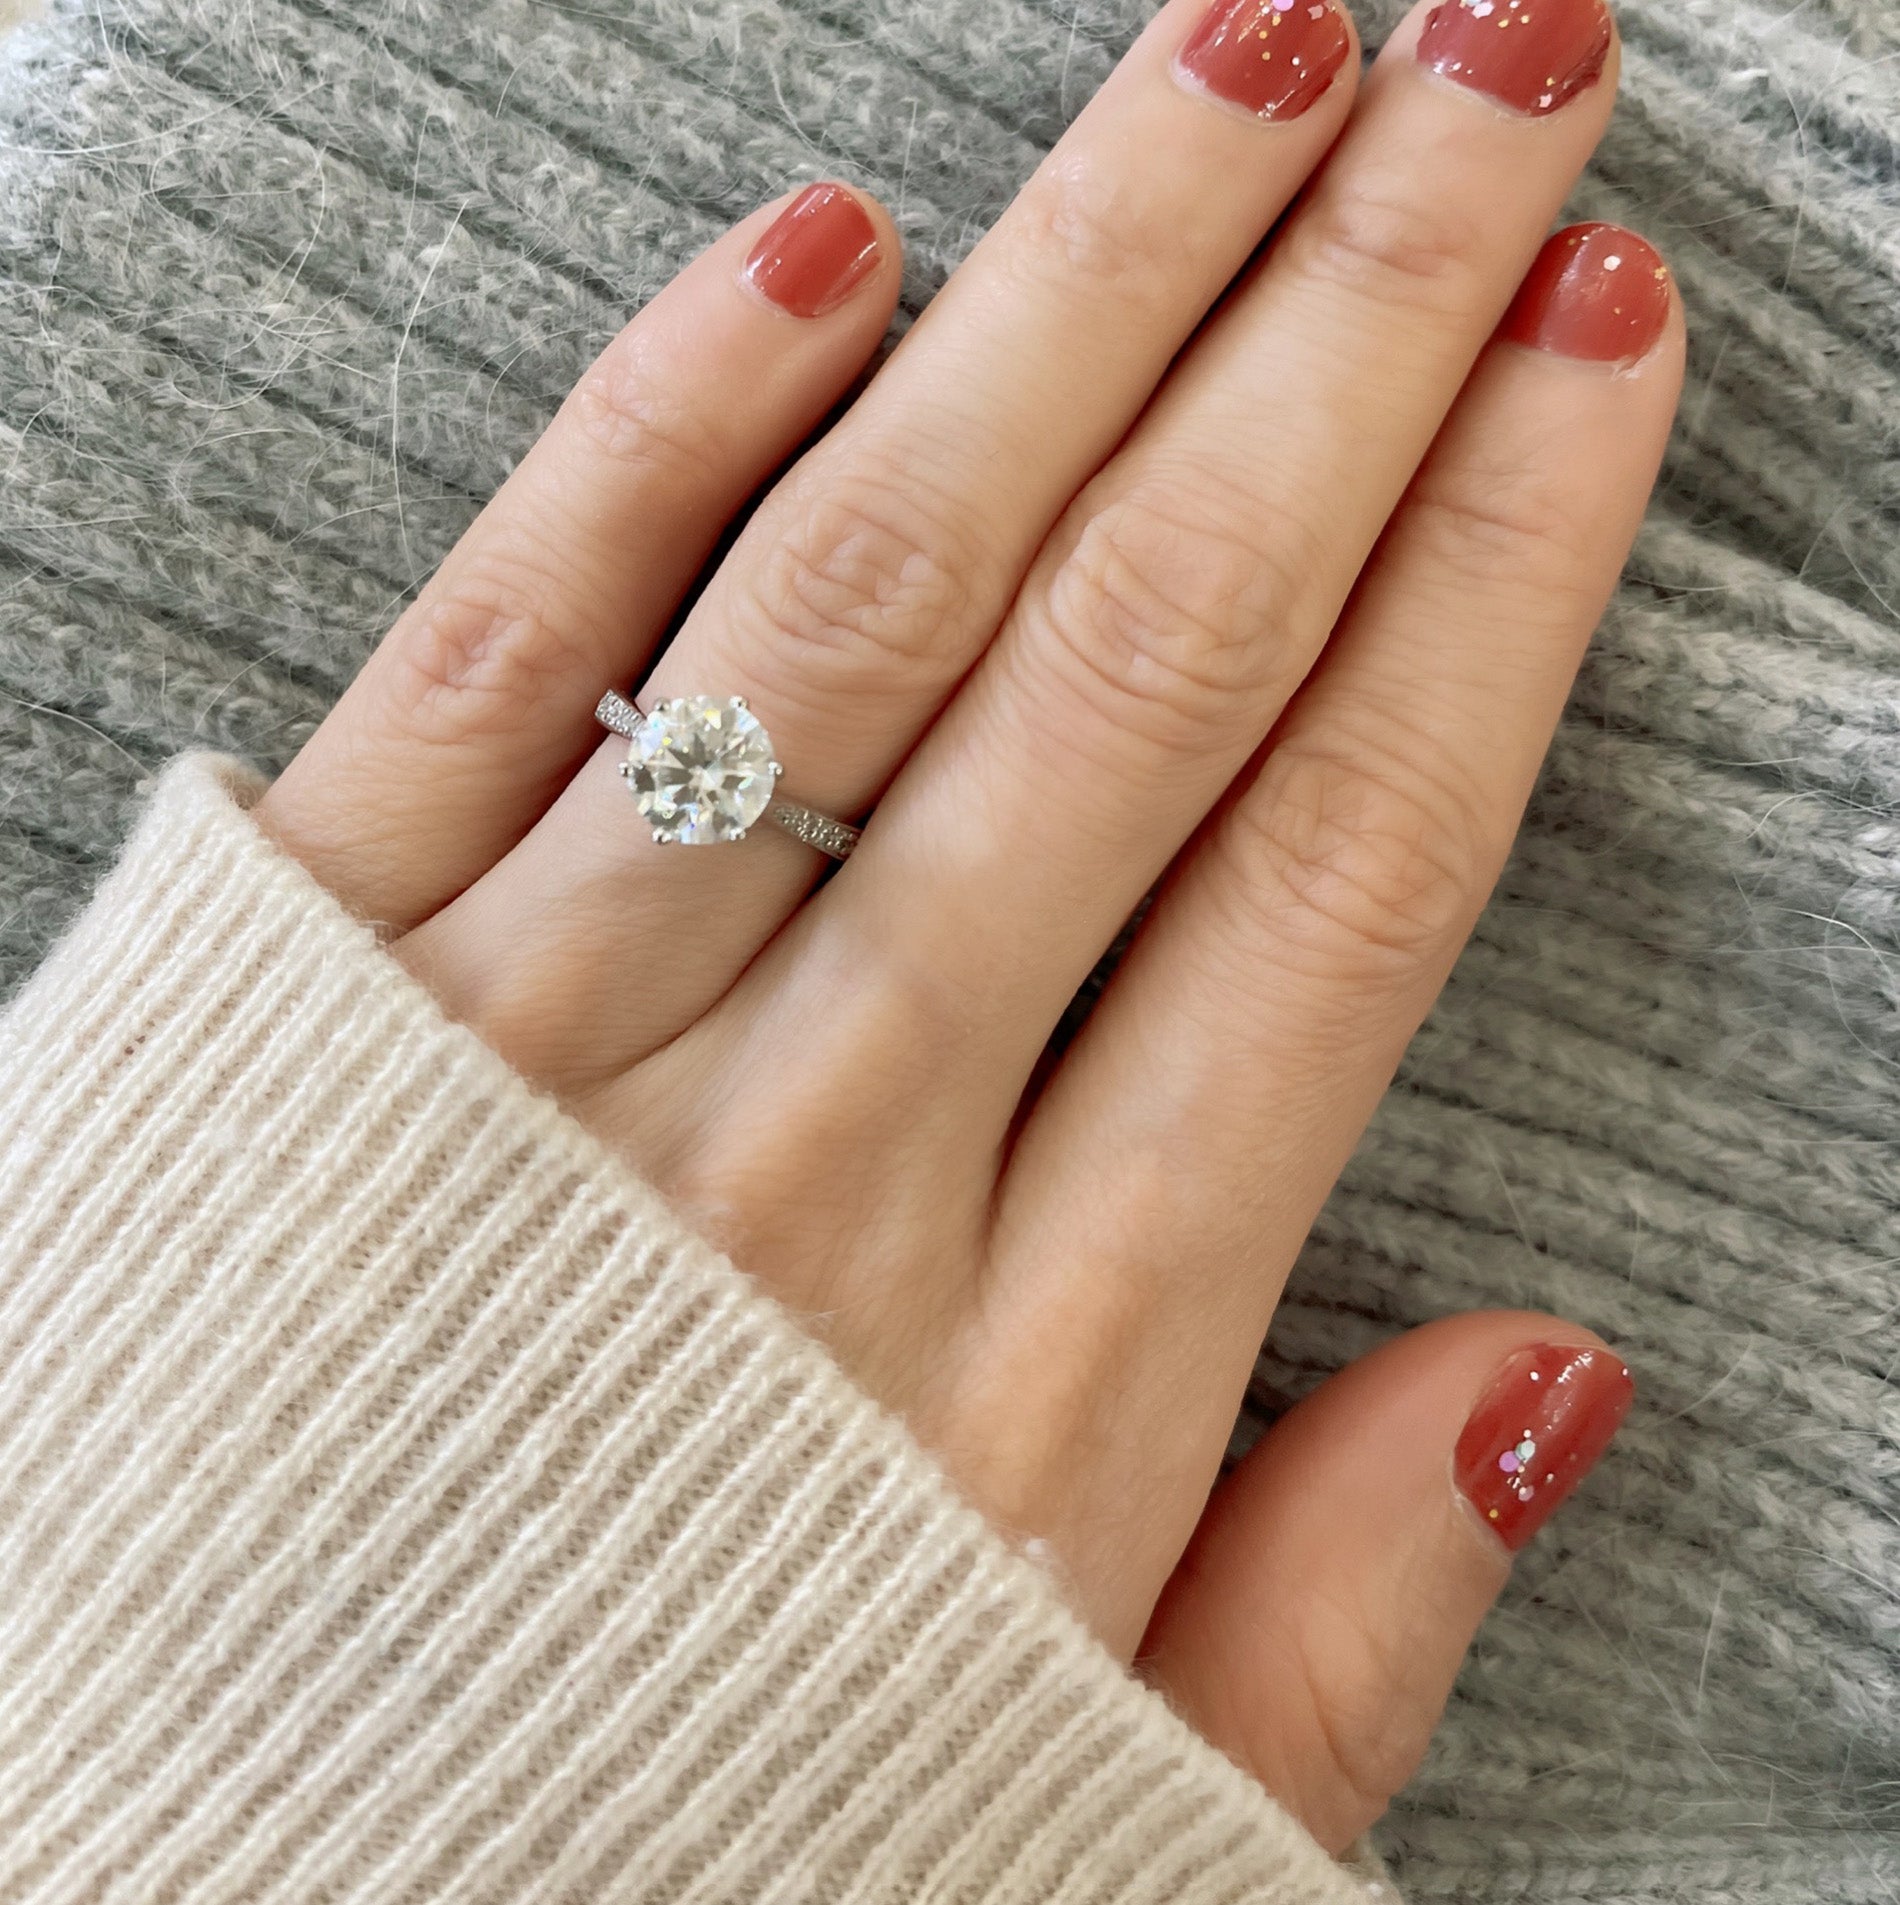 Emma Diamond Ring - Engagement Ring